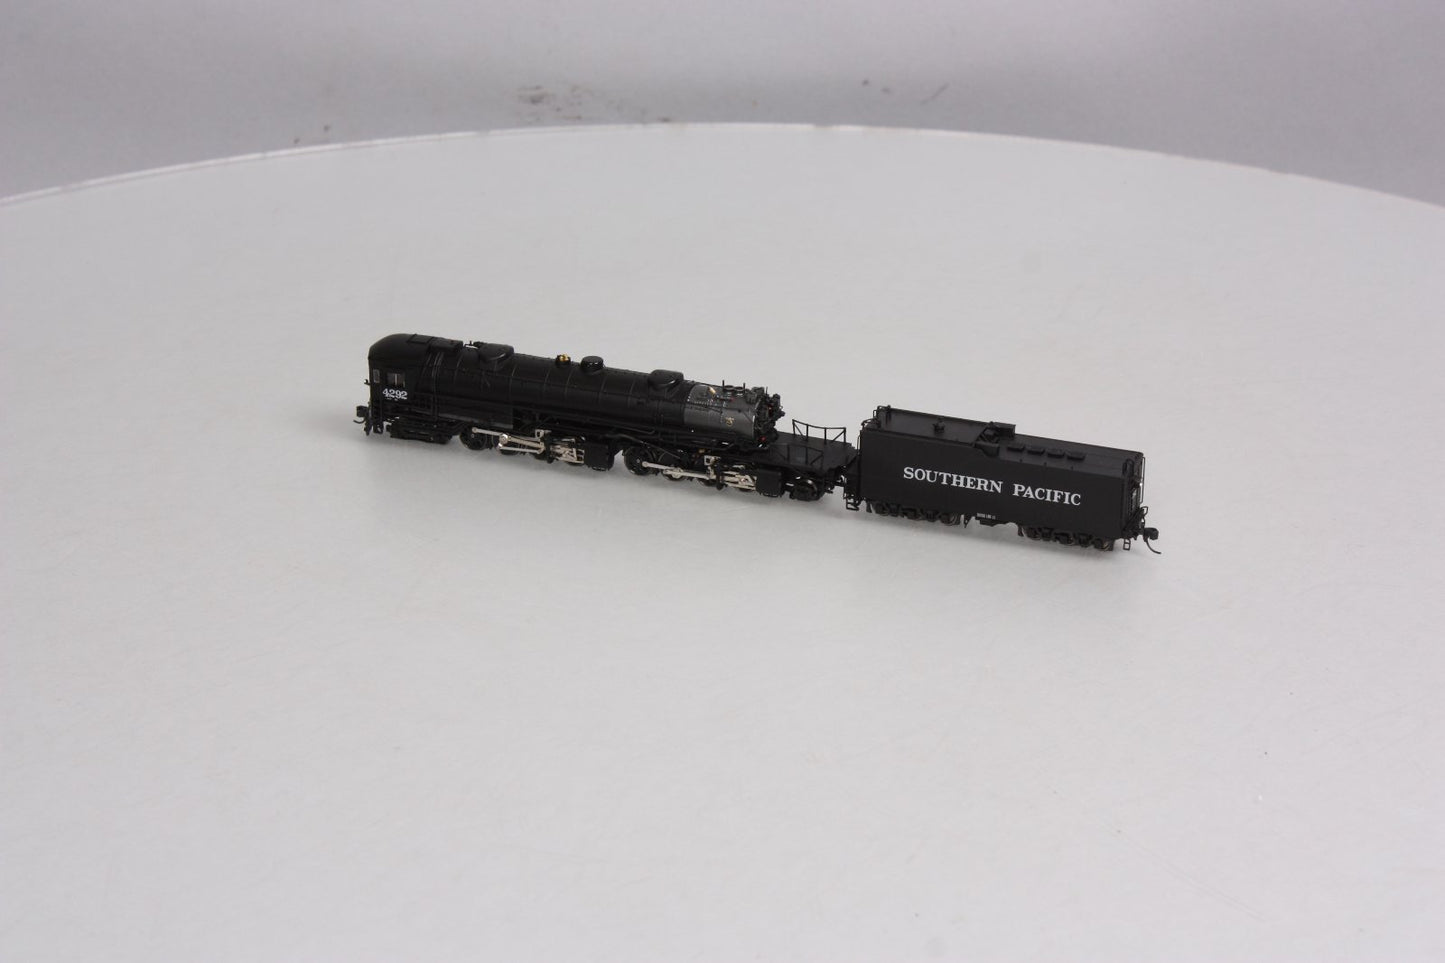 InterMountain 79005 N Southern Pacific AC-12 4-8-8-2 Steam Locomotive #4292